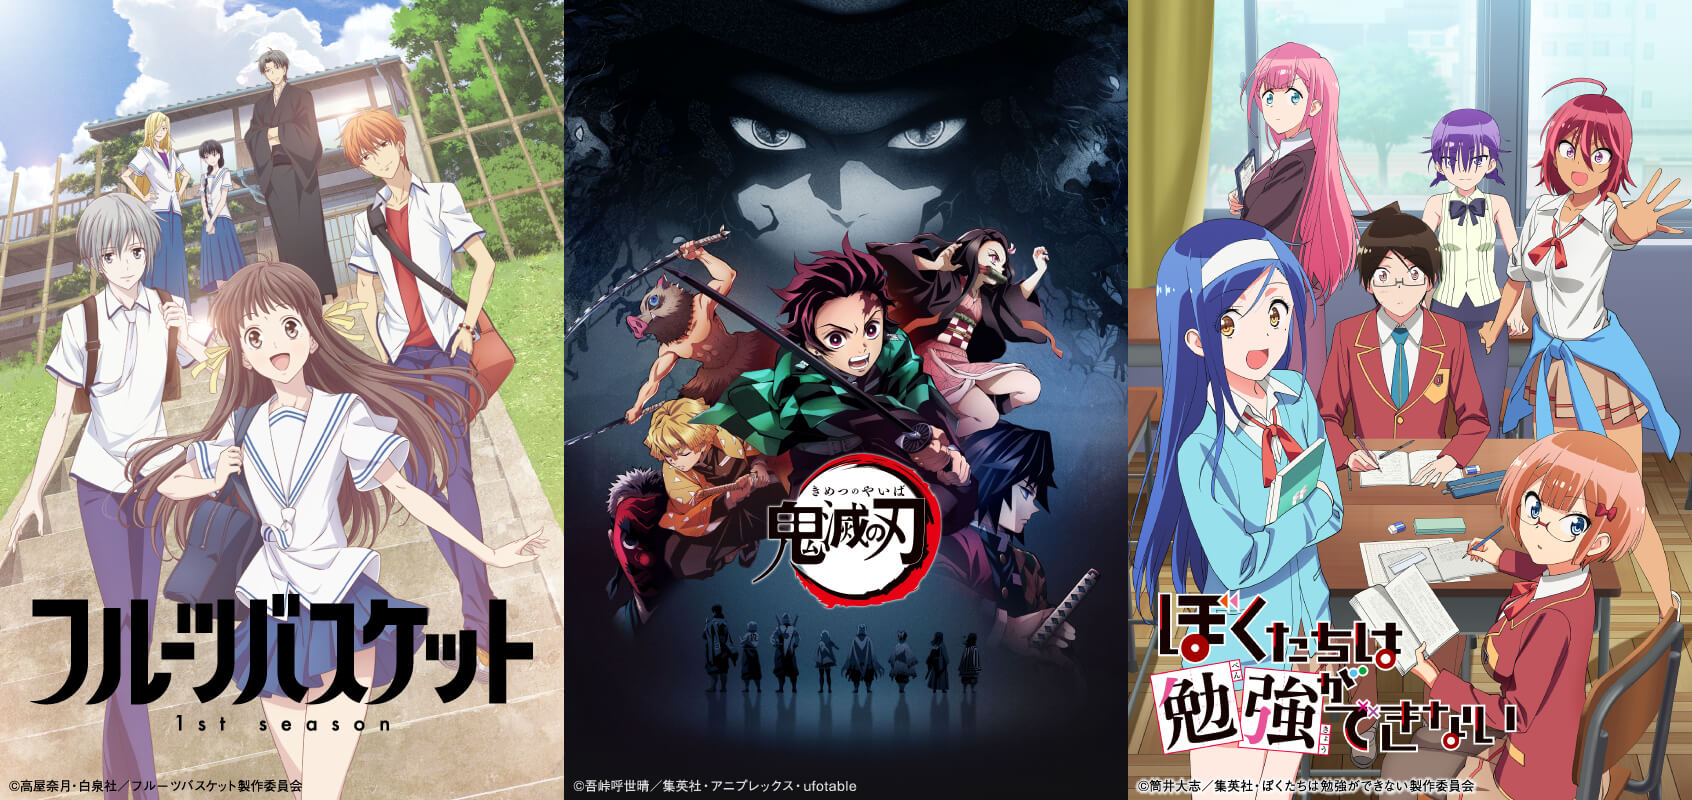 Watch Popular Anime Shows Online  Hulu Free Trial